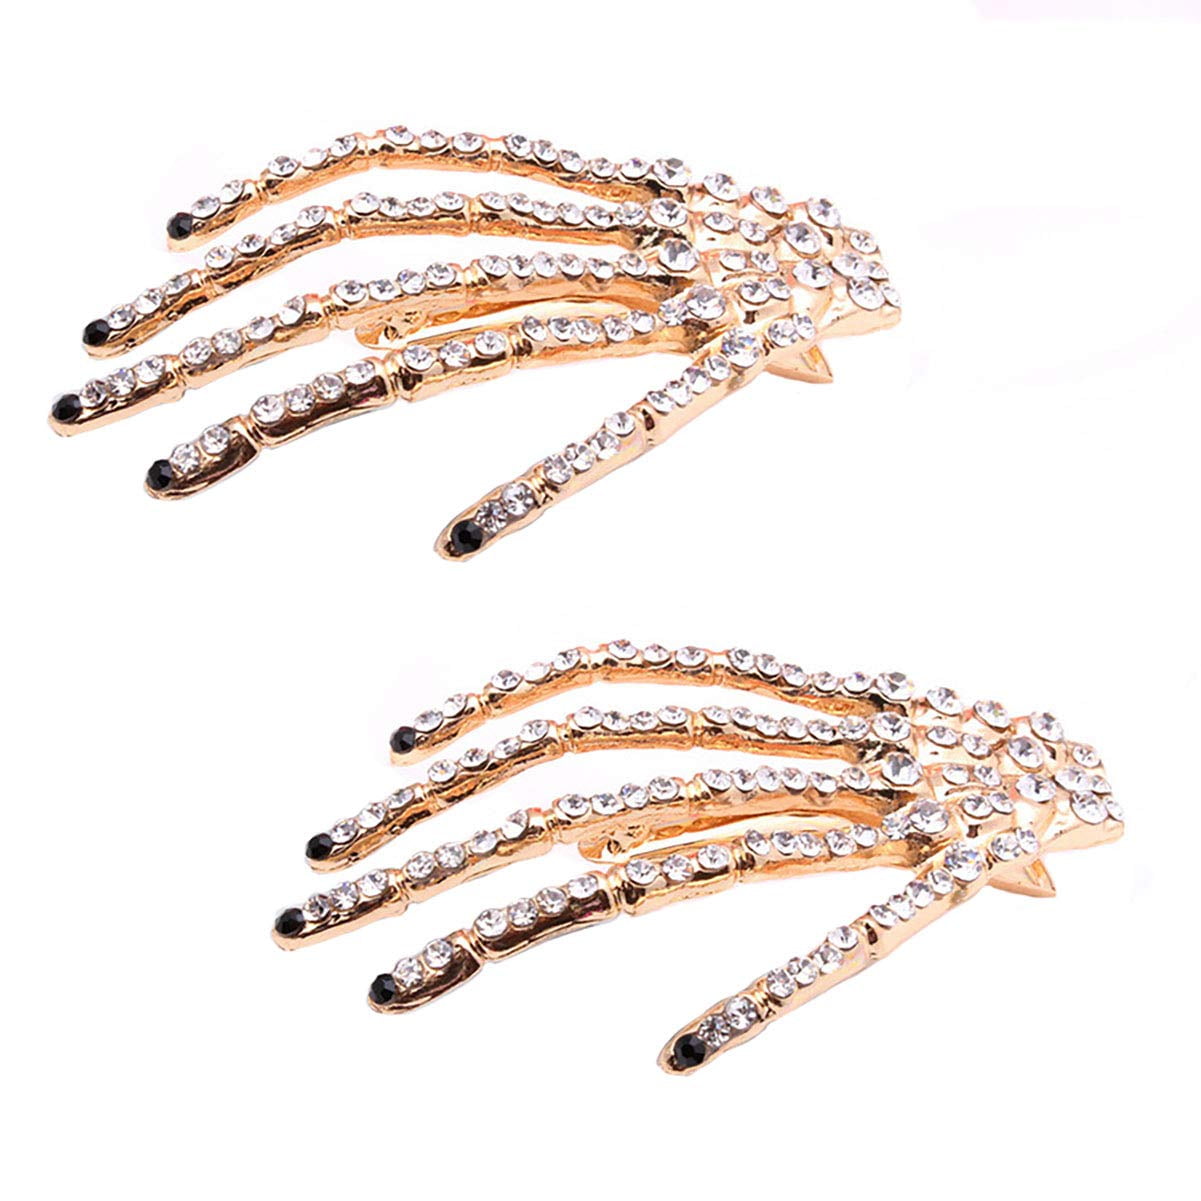 Details about    Fashion Women's Metal Hair Clips Hairpin Hair Pins Barrette Grips Accessories